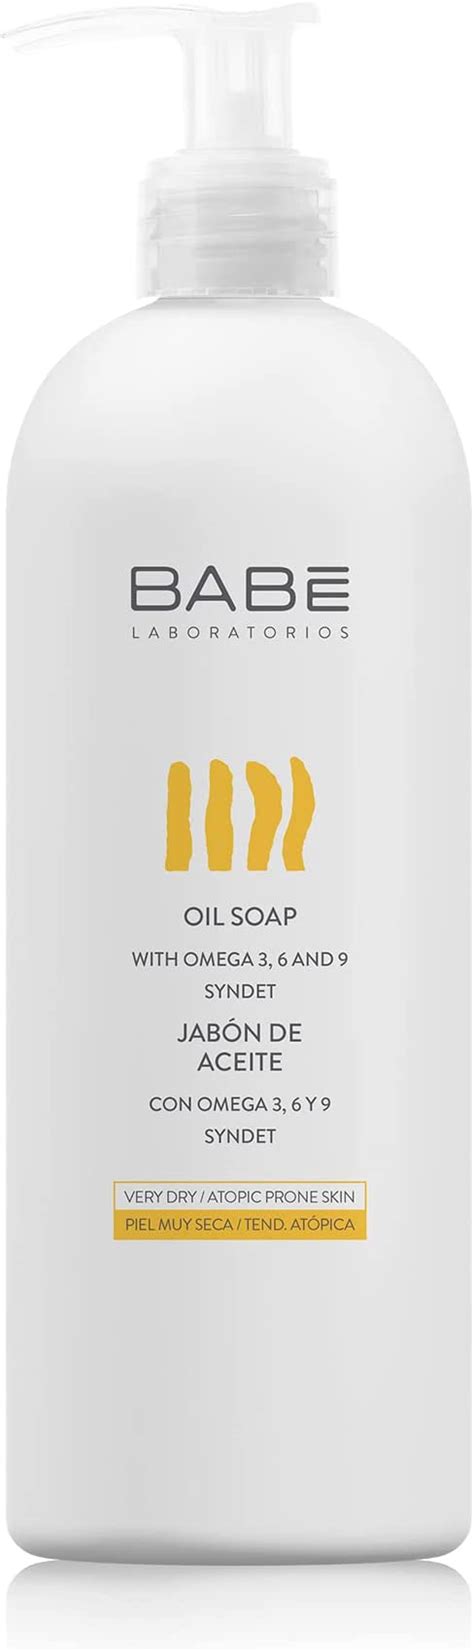 Babe Oil Soap Arogga Online Pharmacy Of Bangladesh